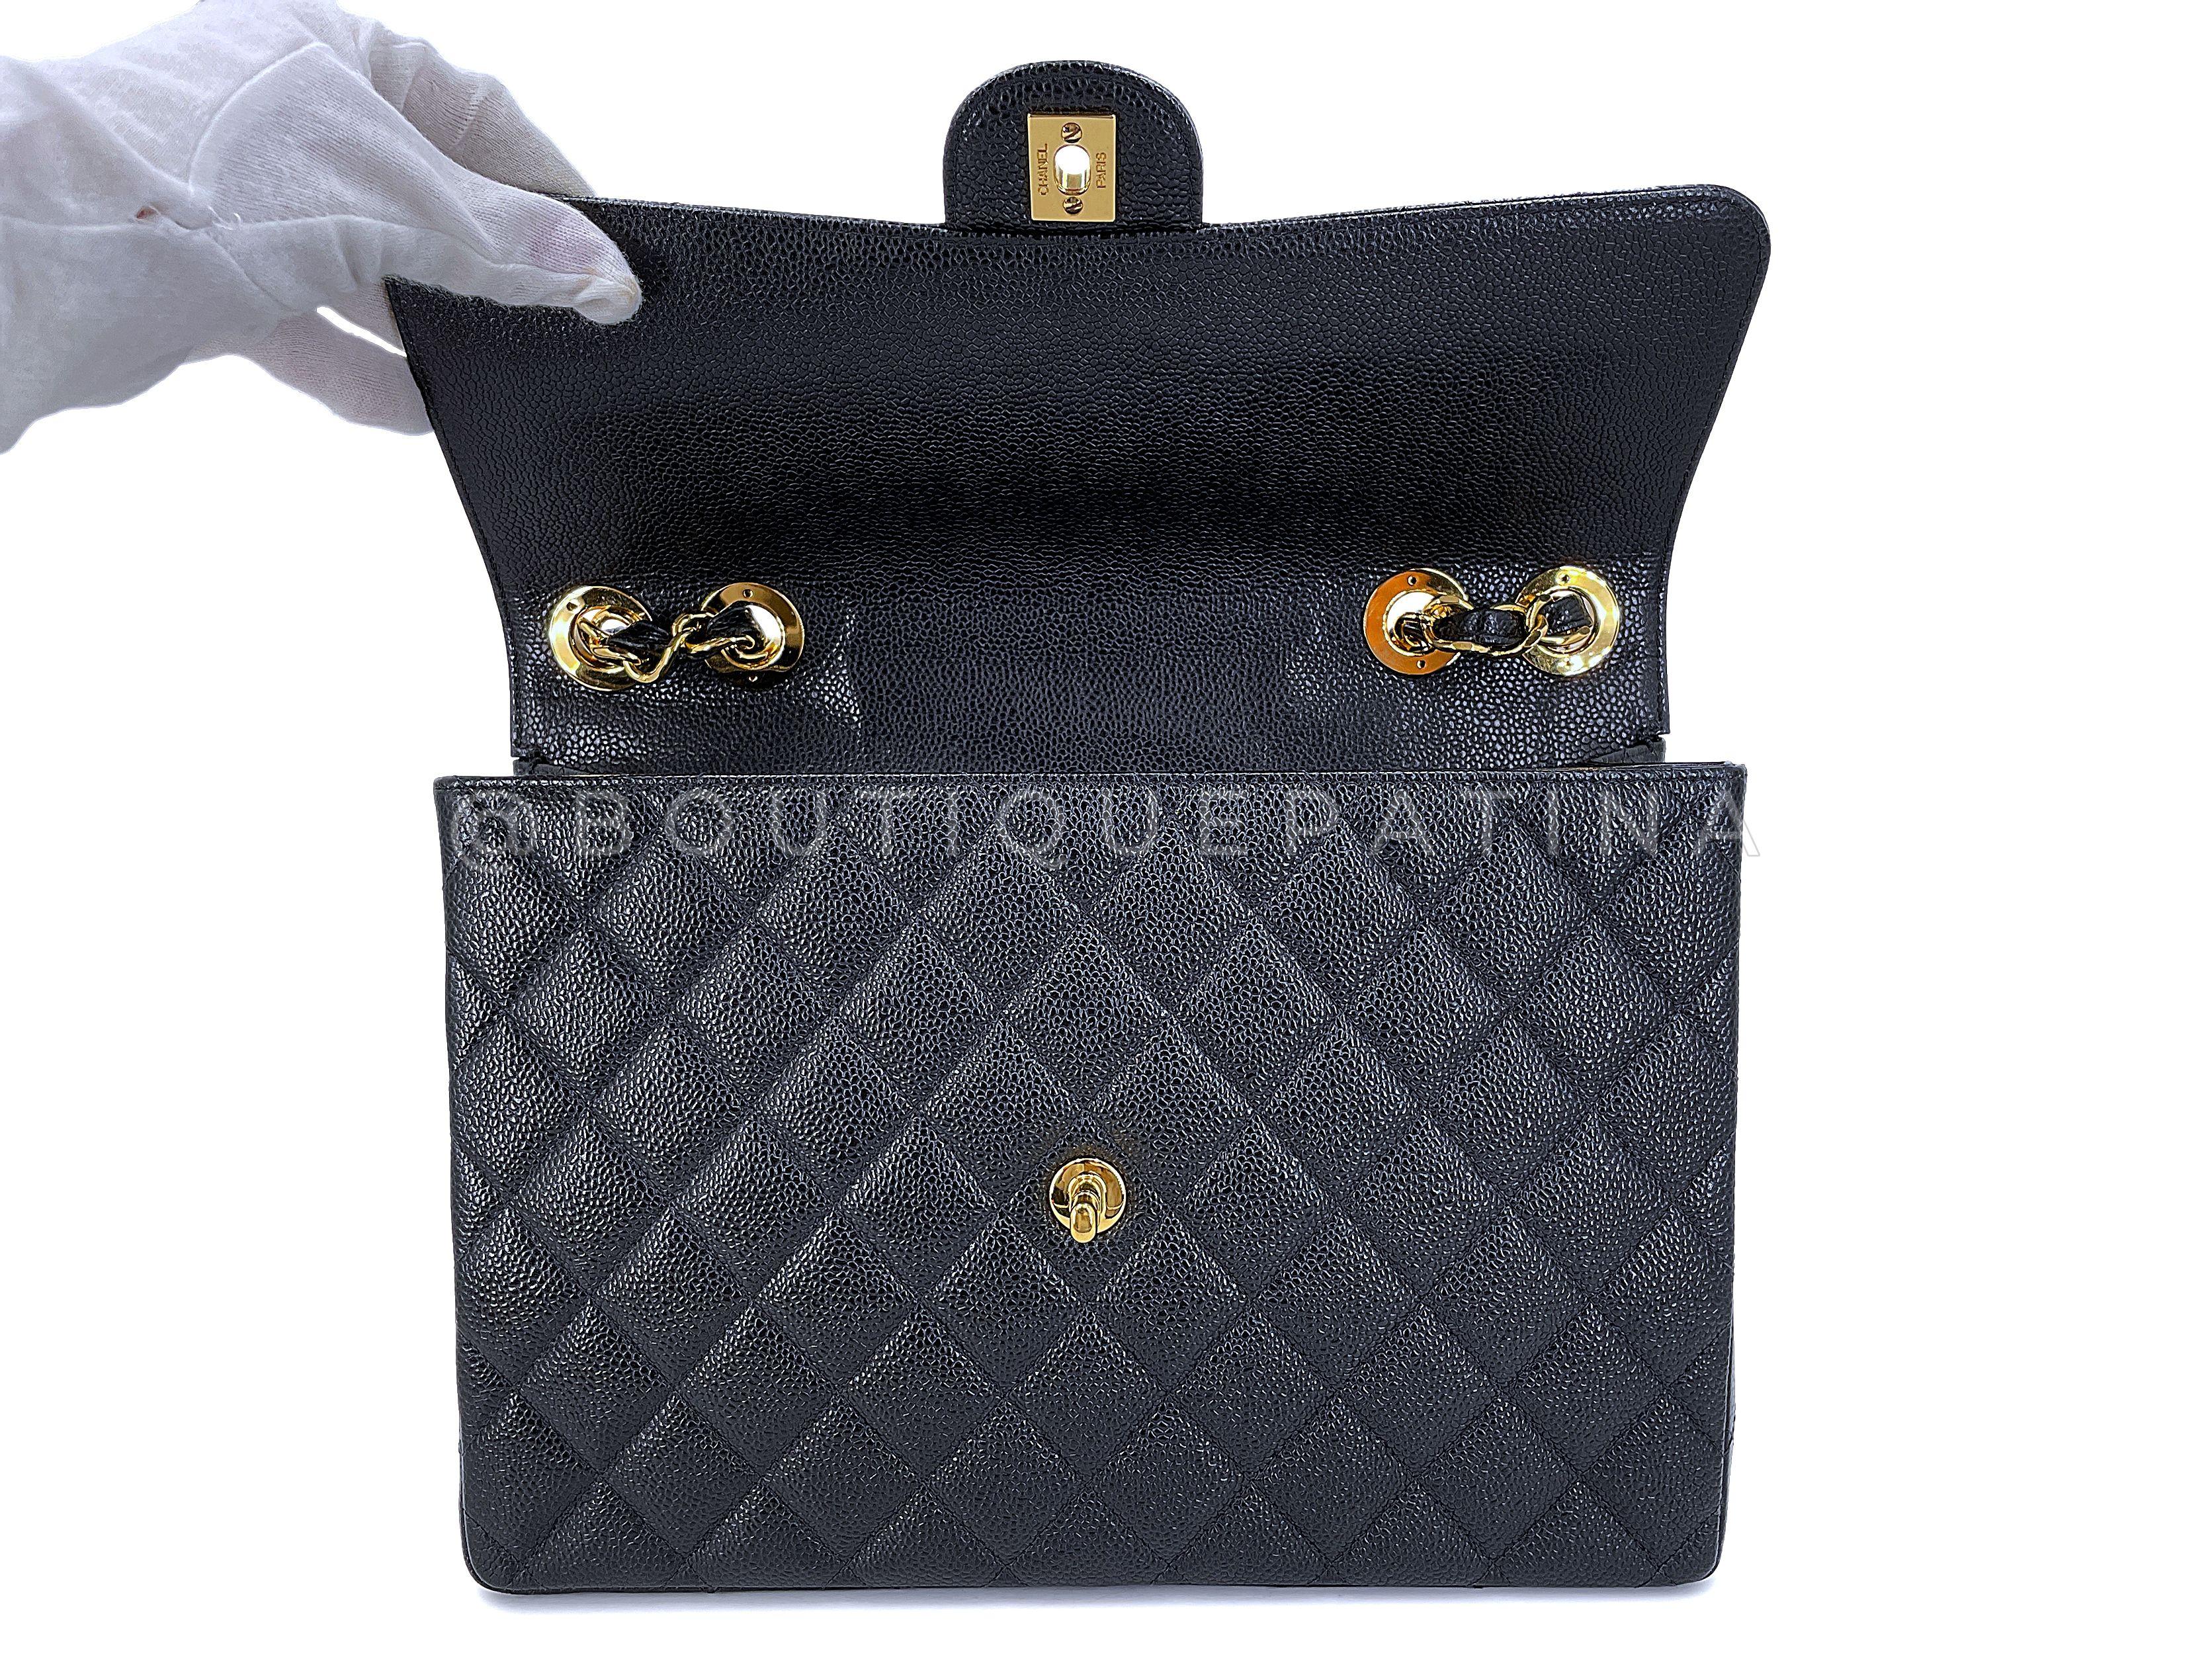 Pristine Chanel 2002 Vintage Black Caviar Jumbo Classic Flap Bag 24k GHW 67313 For Sale 5